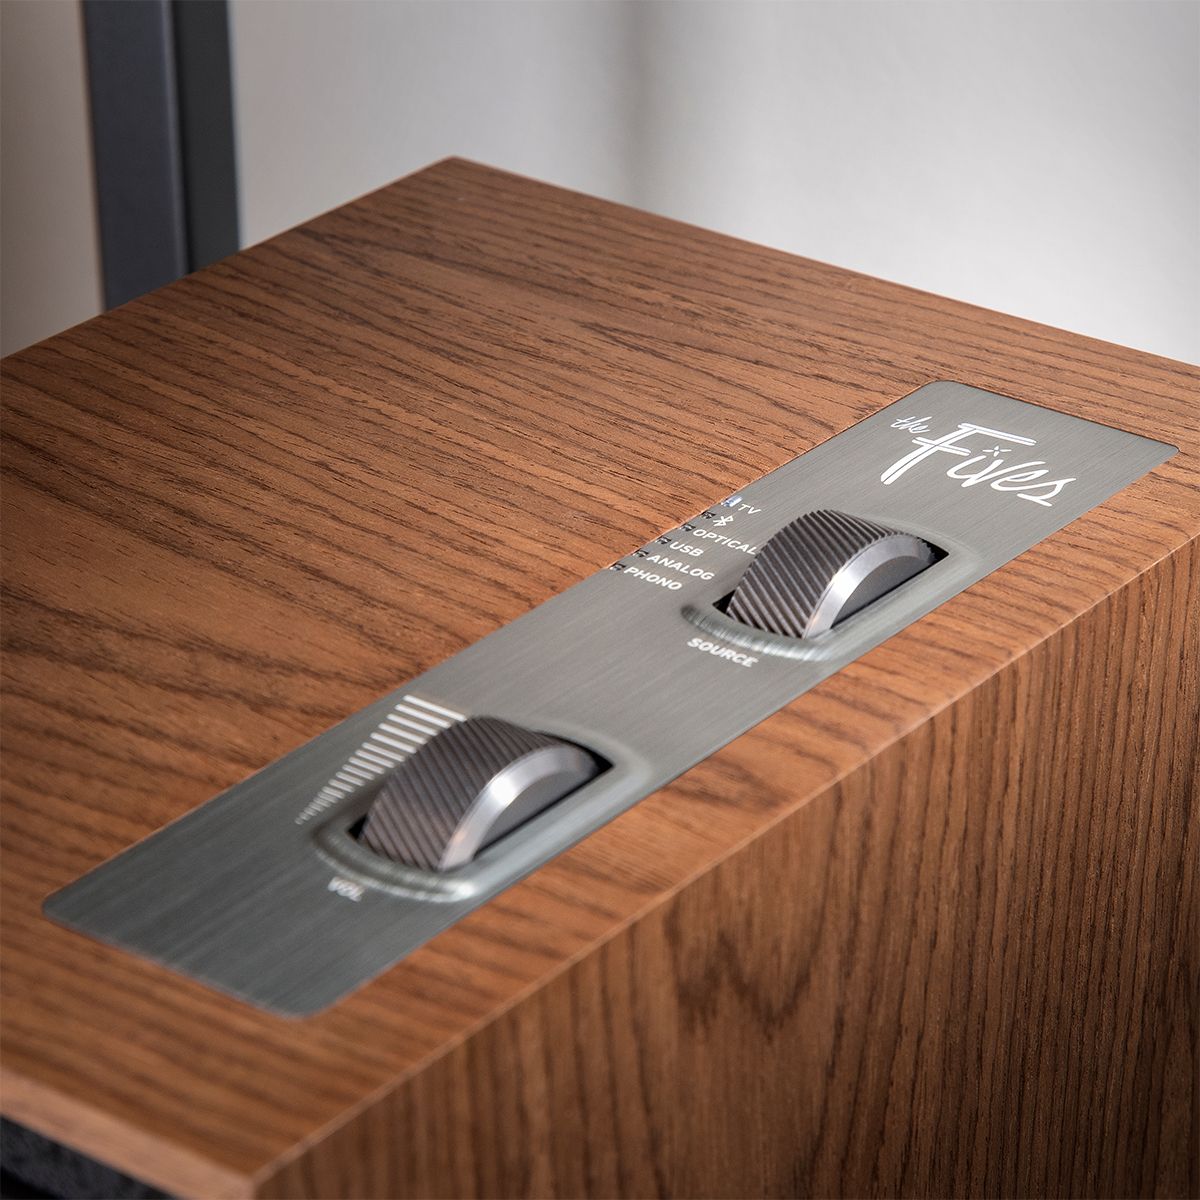 Klipsch The Fives Powered Speaker System - Pair